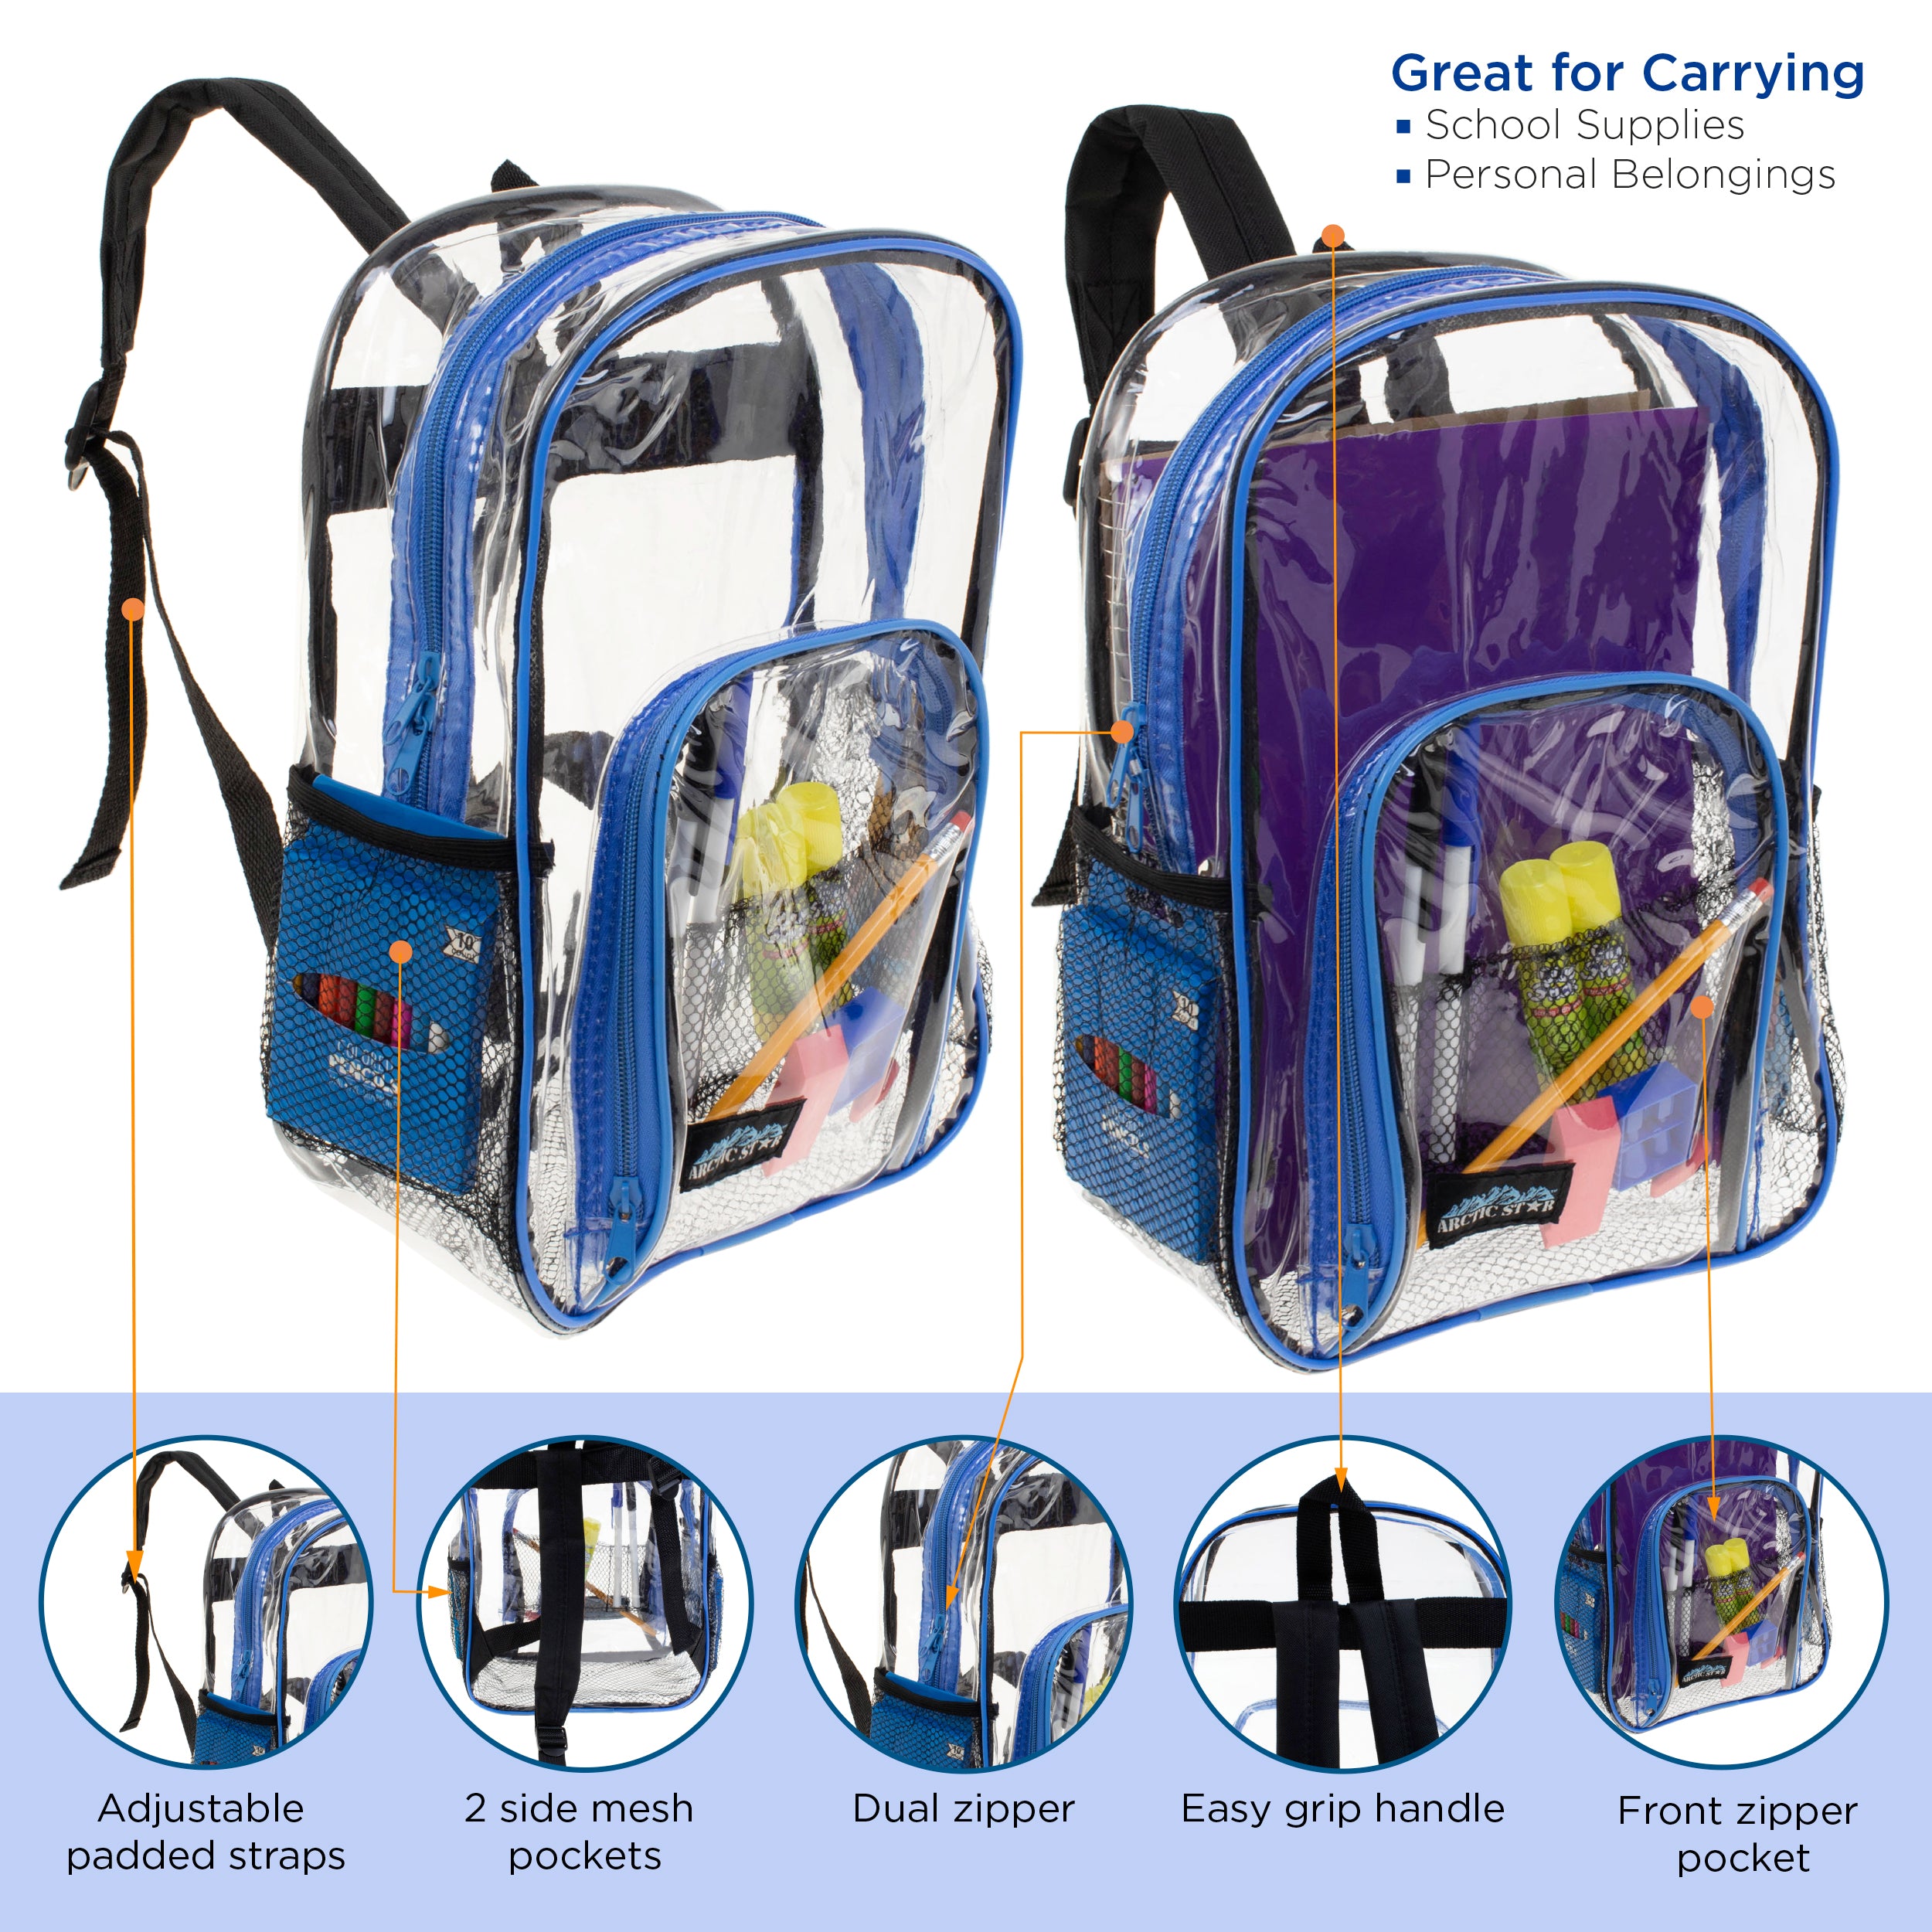 Wholesale Clear and Mesh Backpacks | Backpacks USA